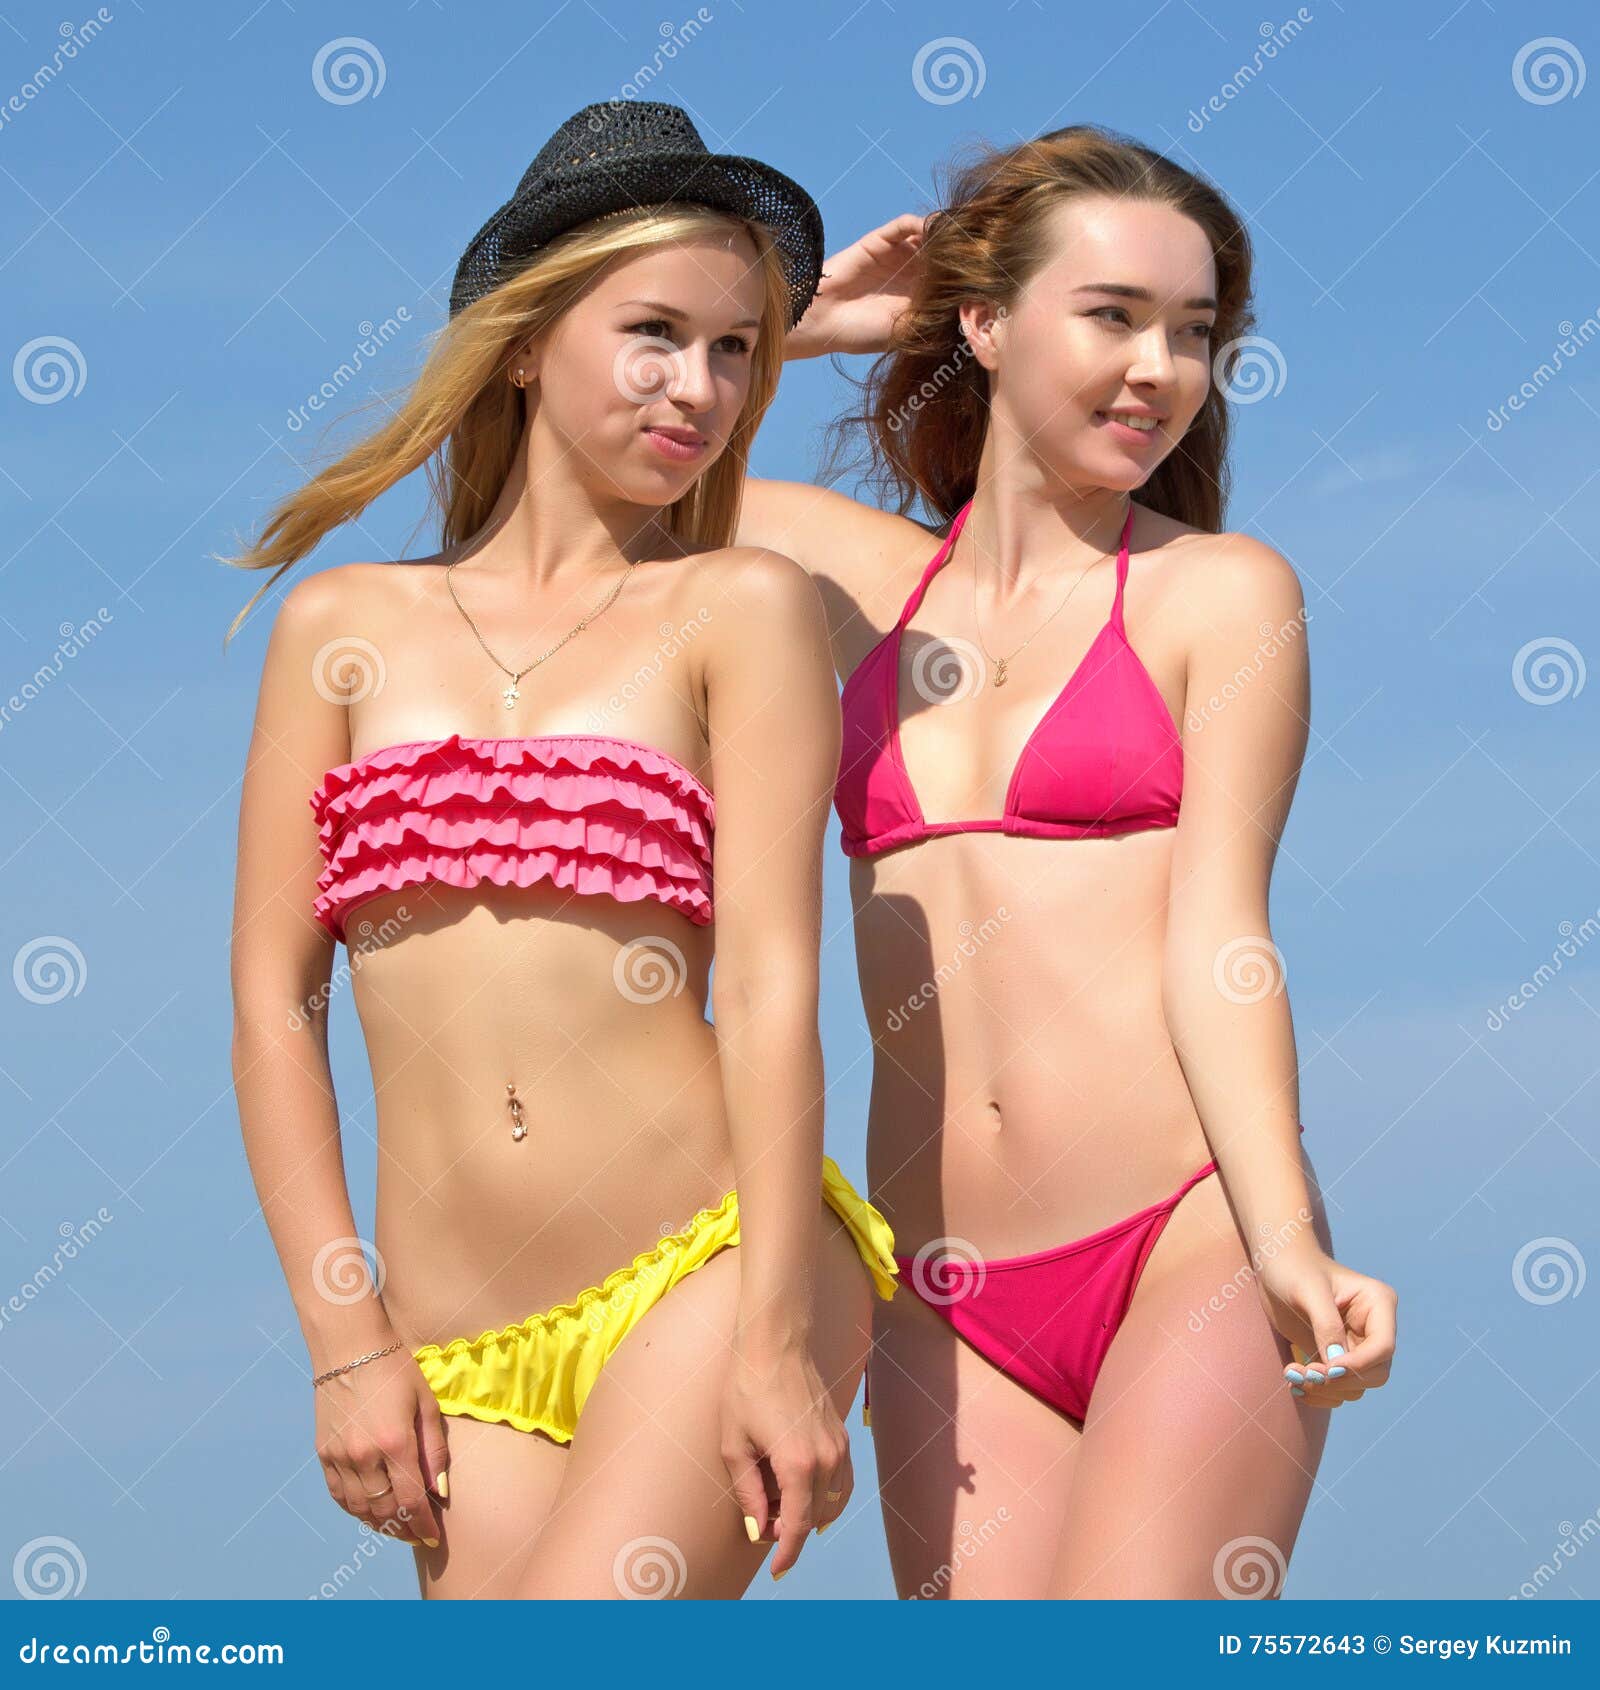 Hot Girls In Bikinis